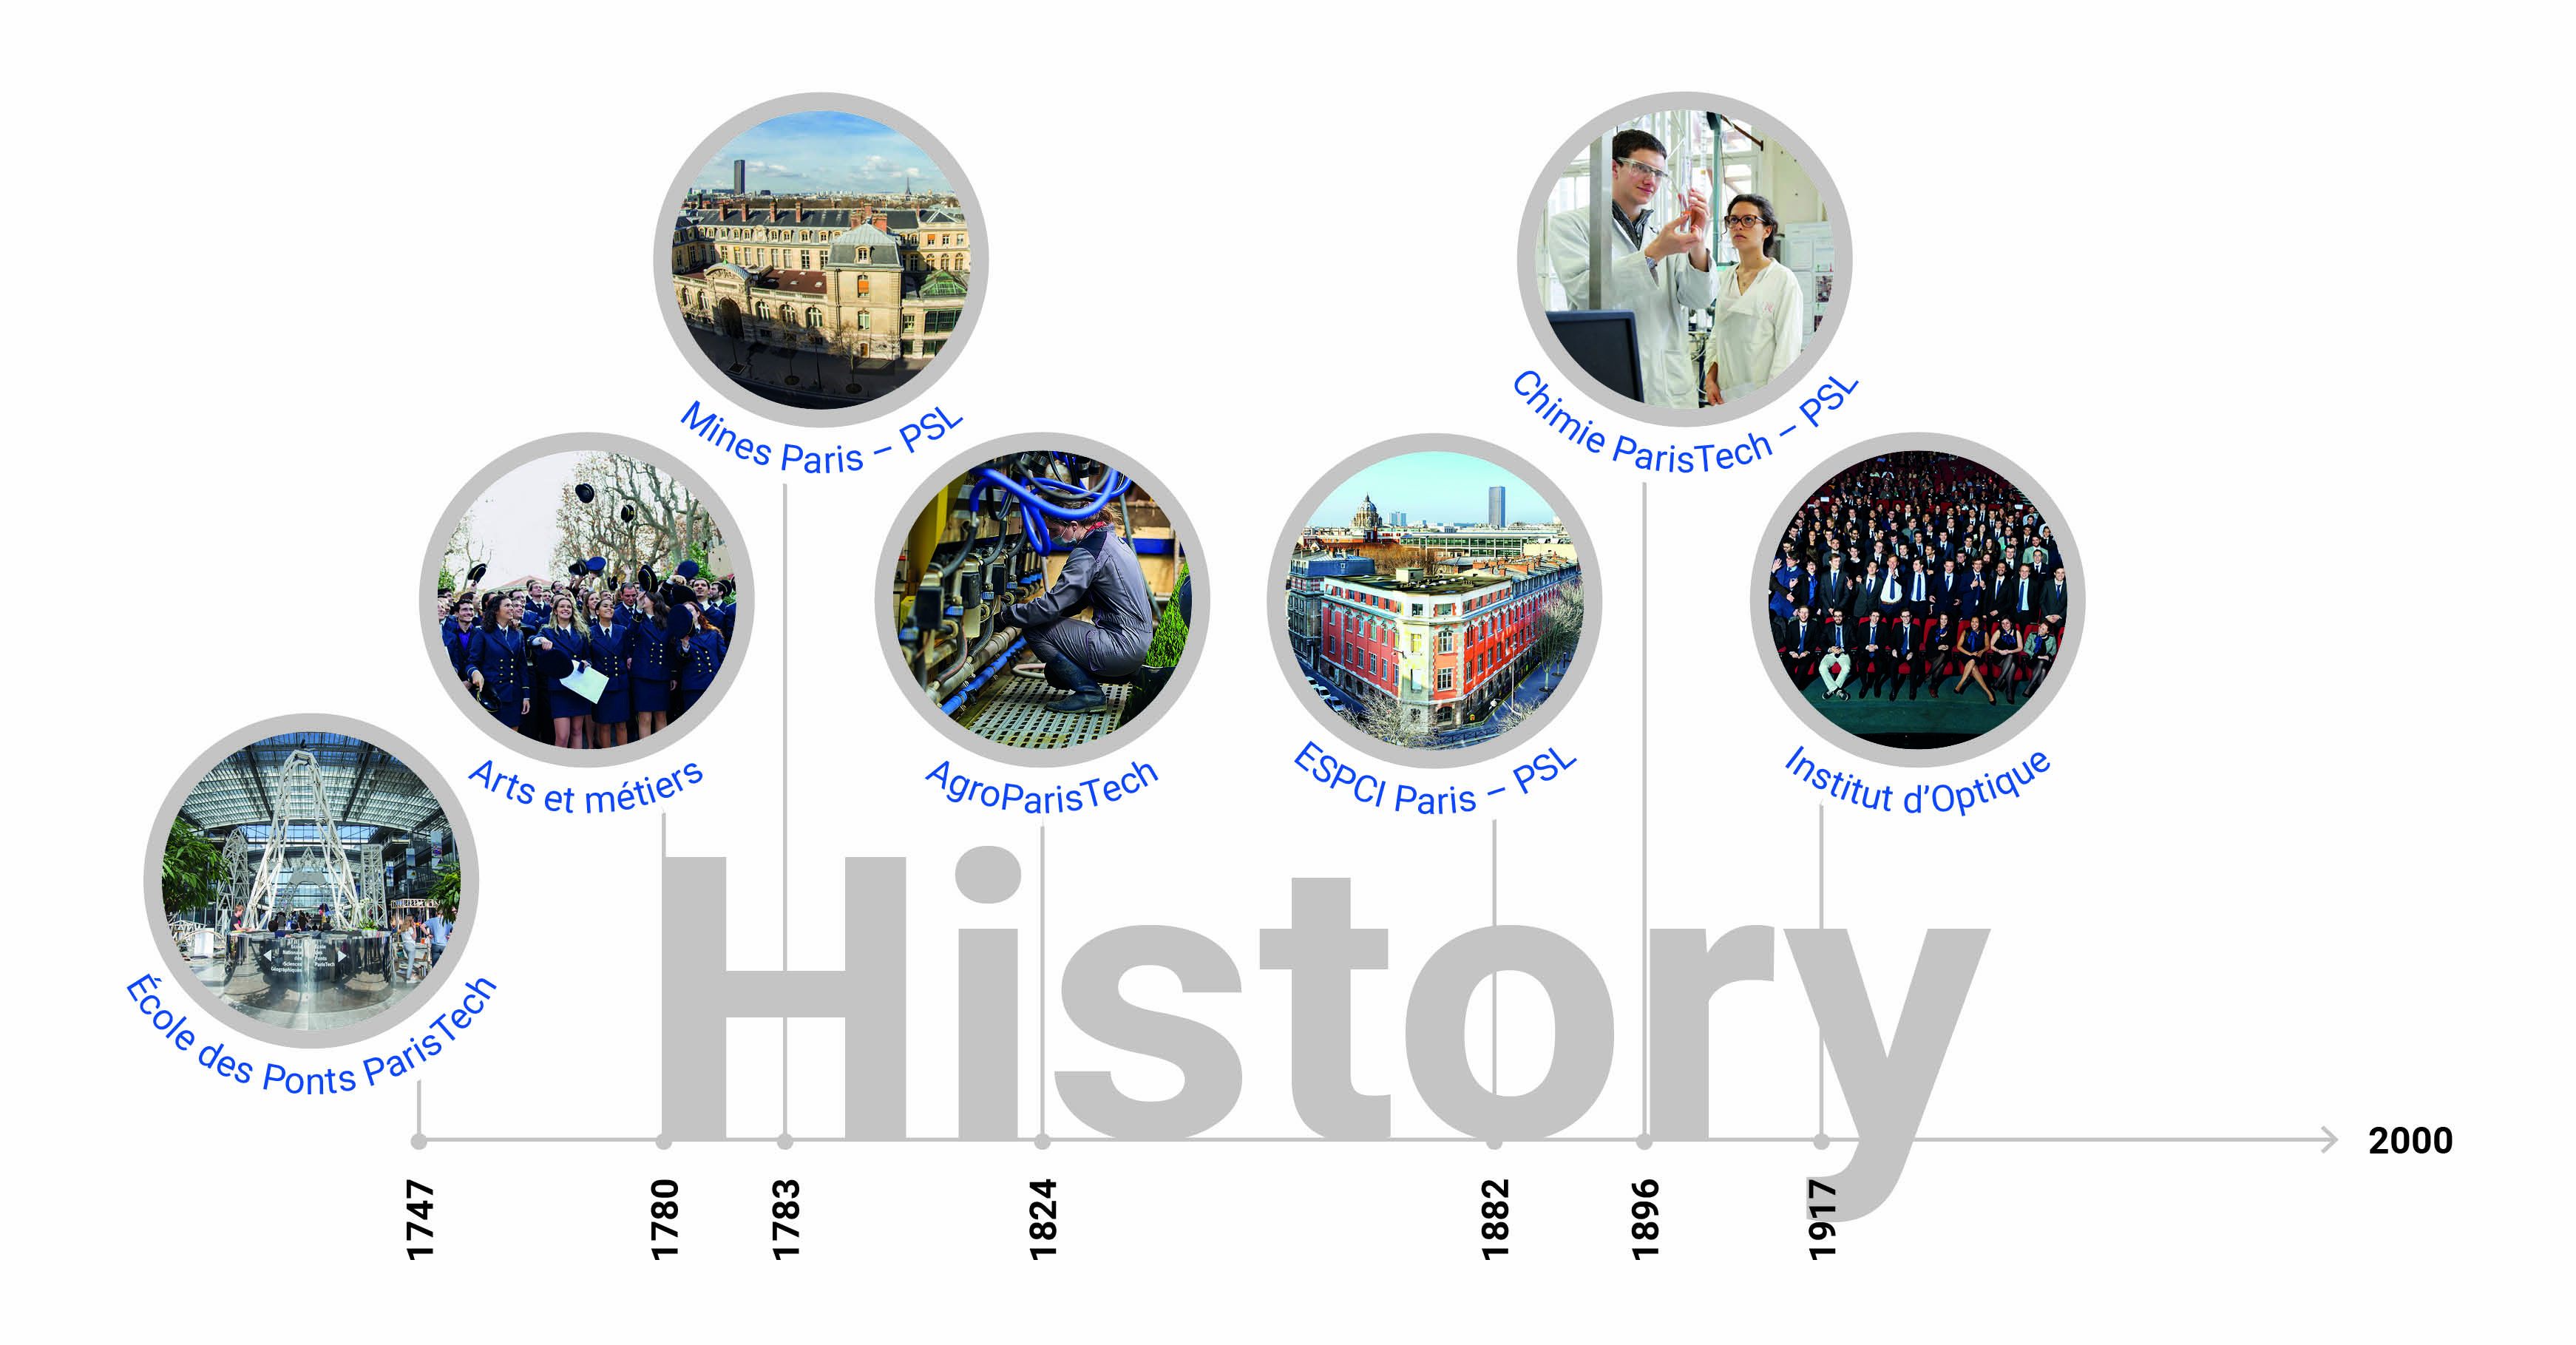 ParisTech schools' history